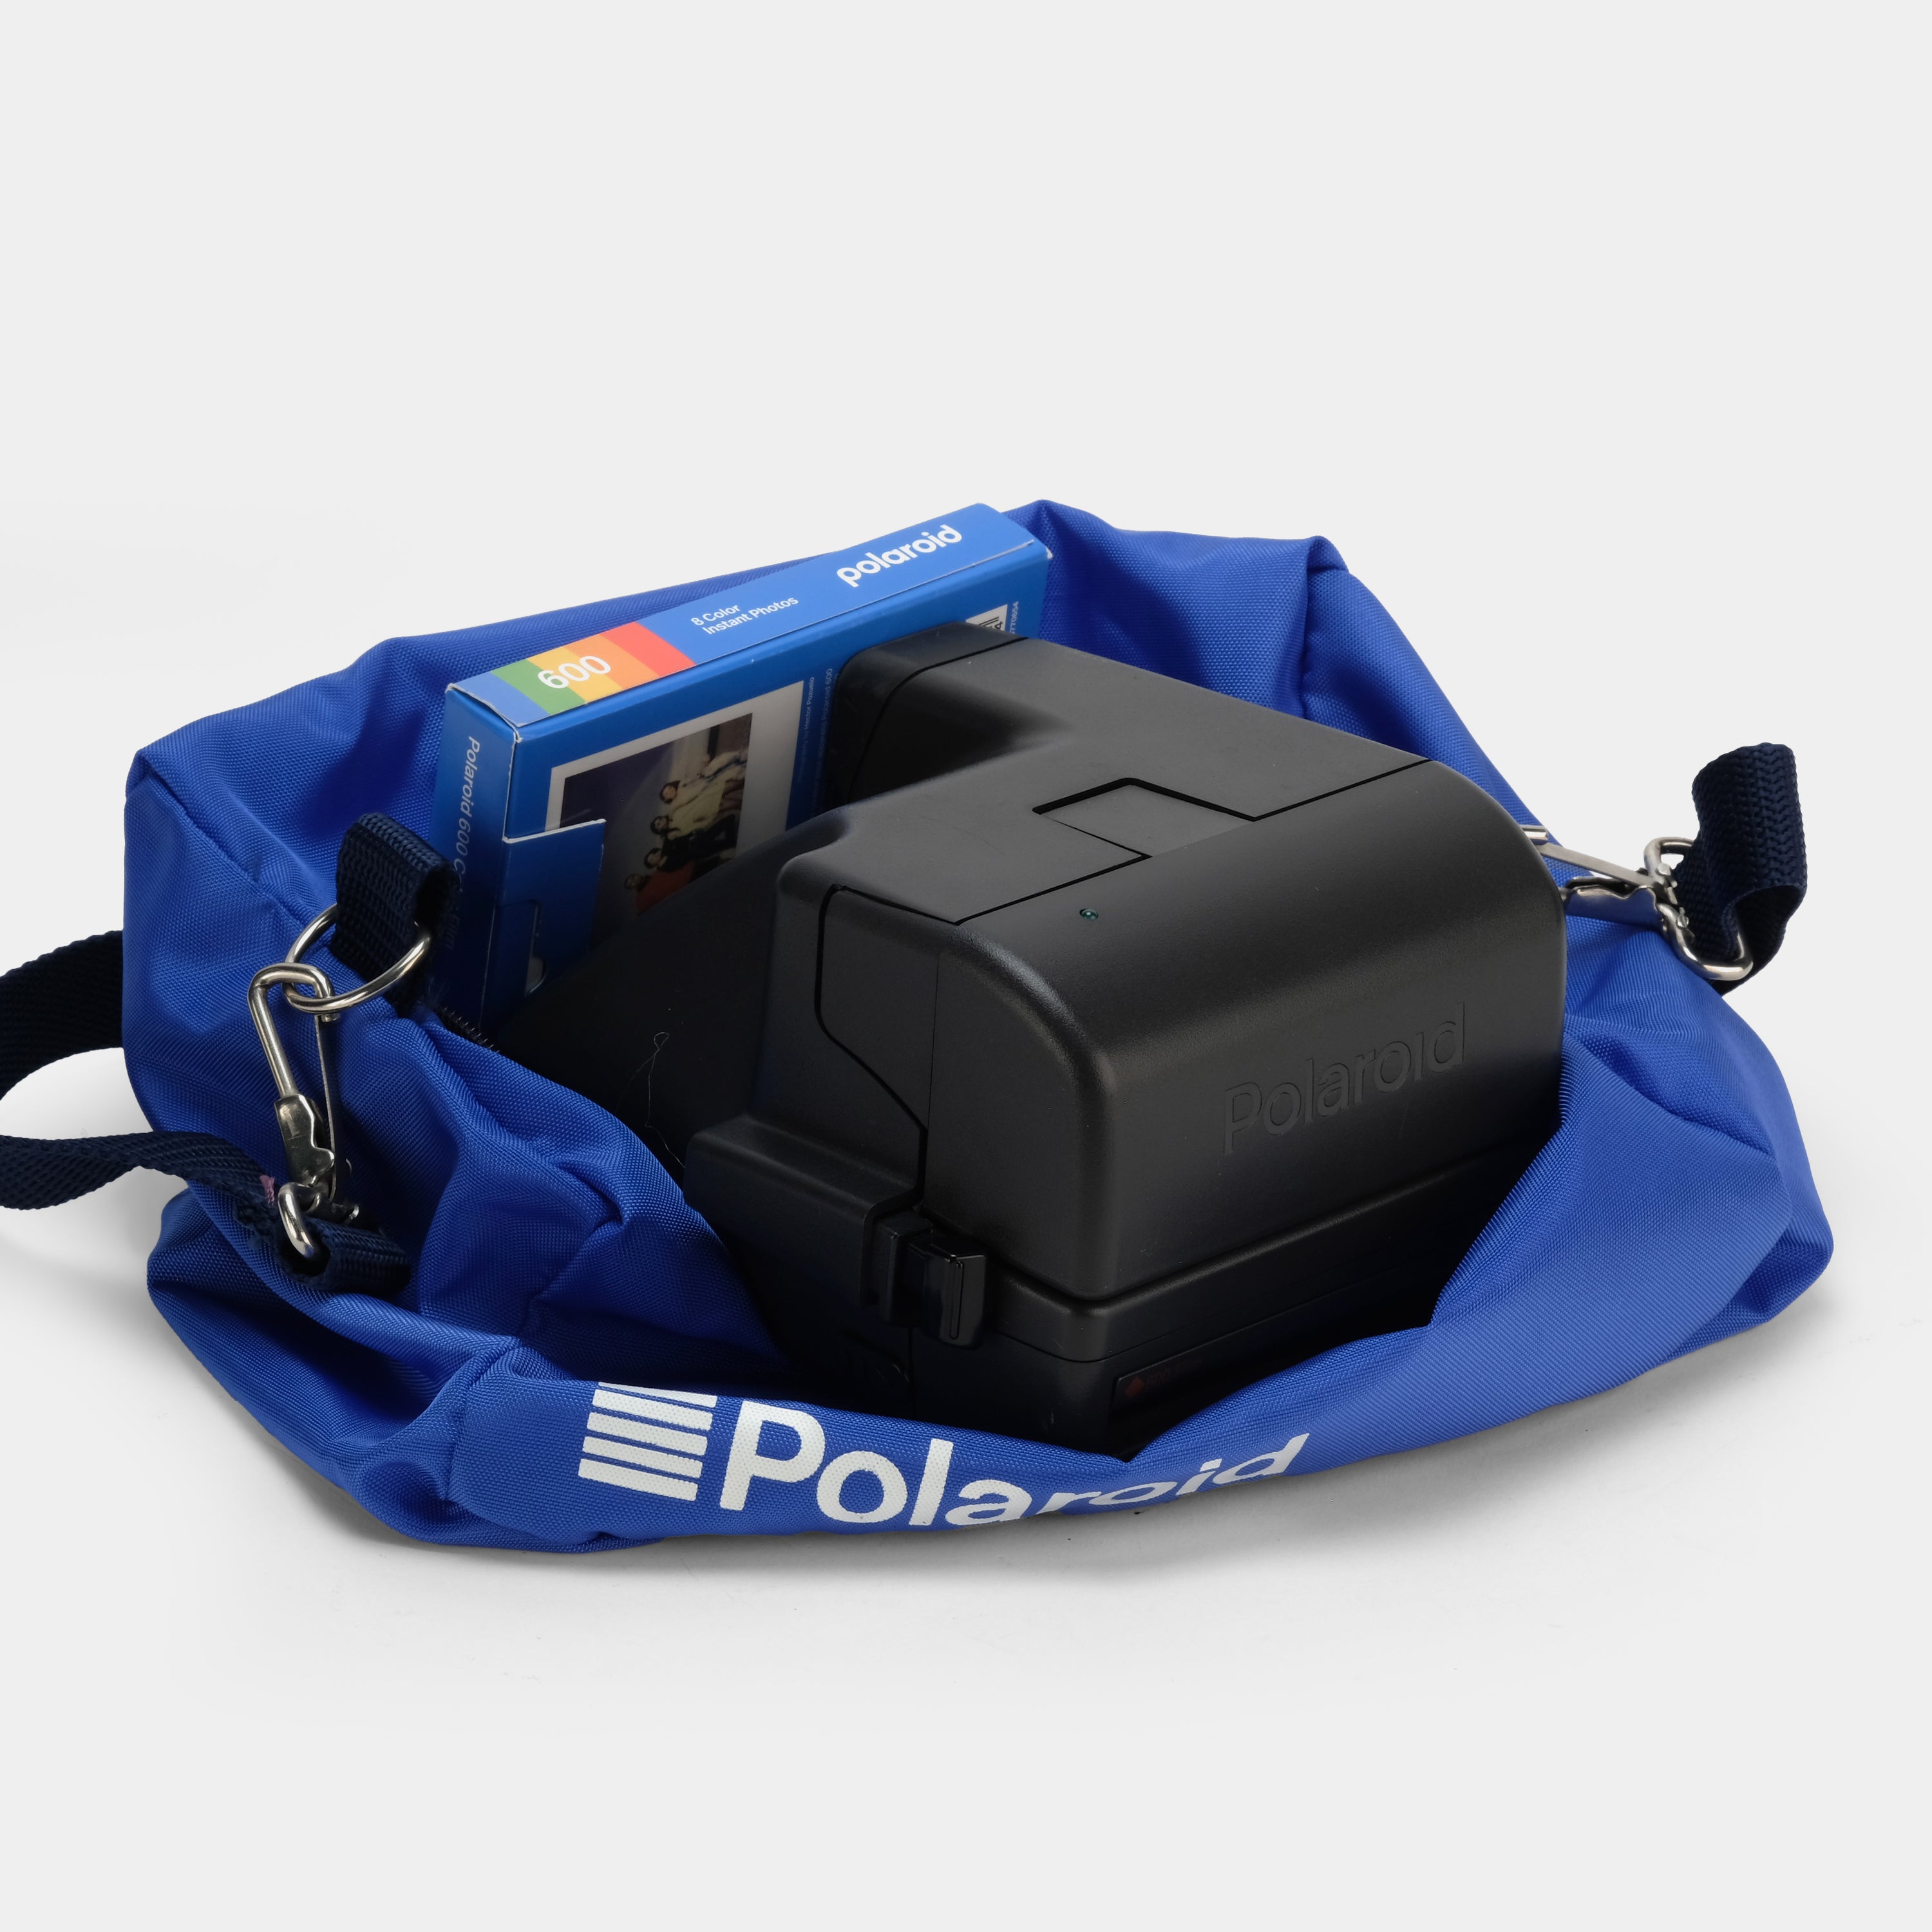 Blue Polaroid Camera Bag